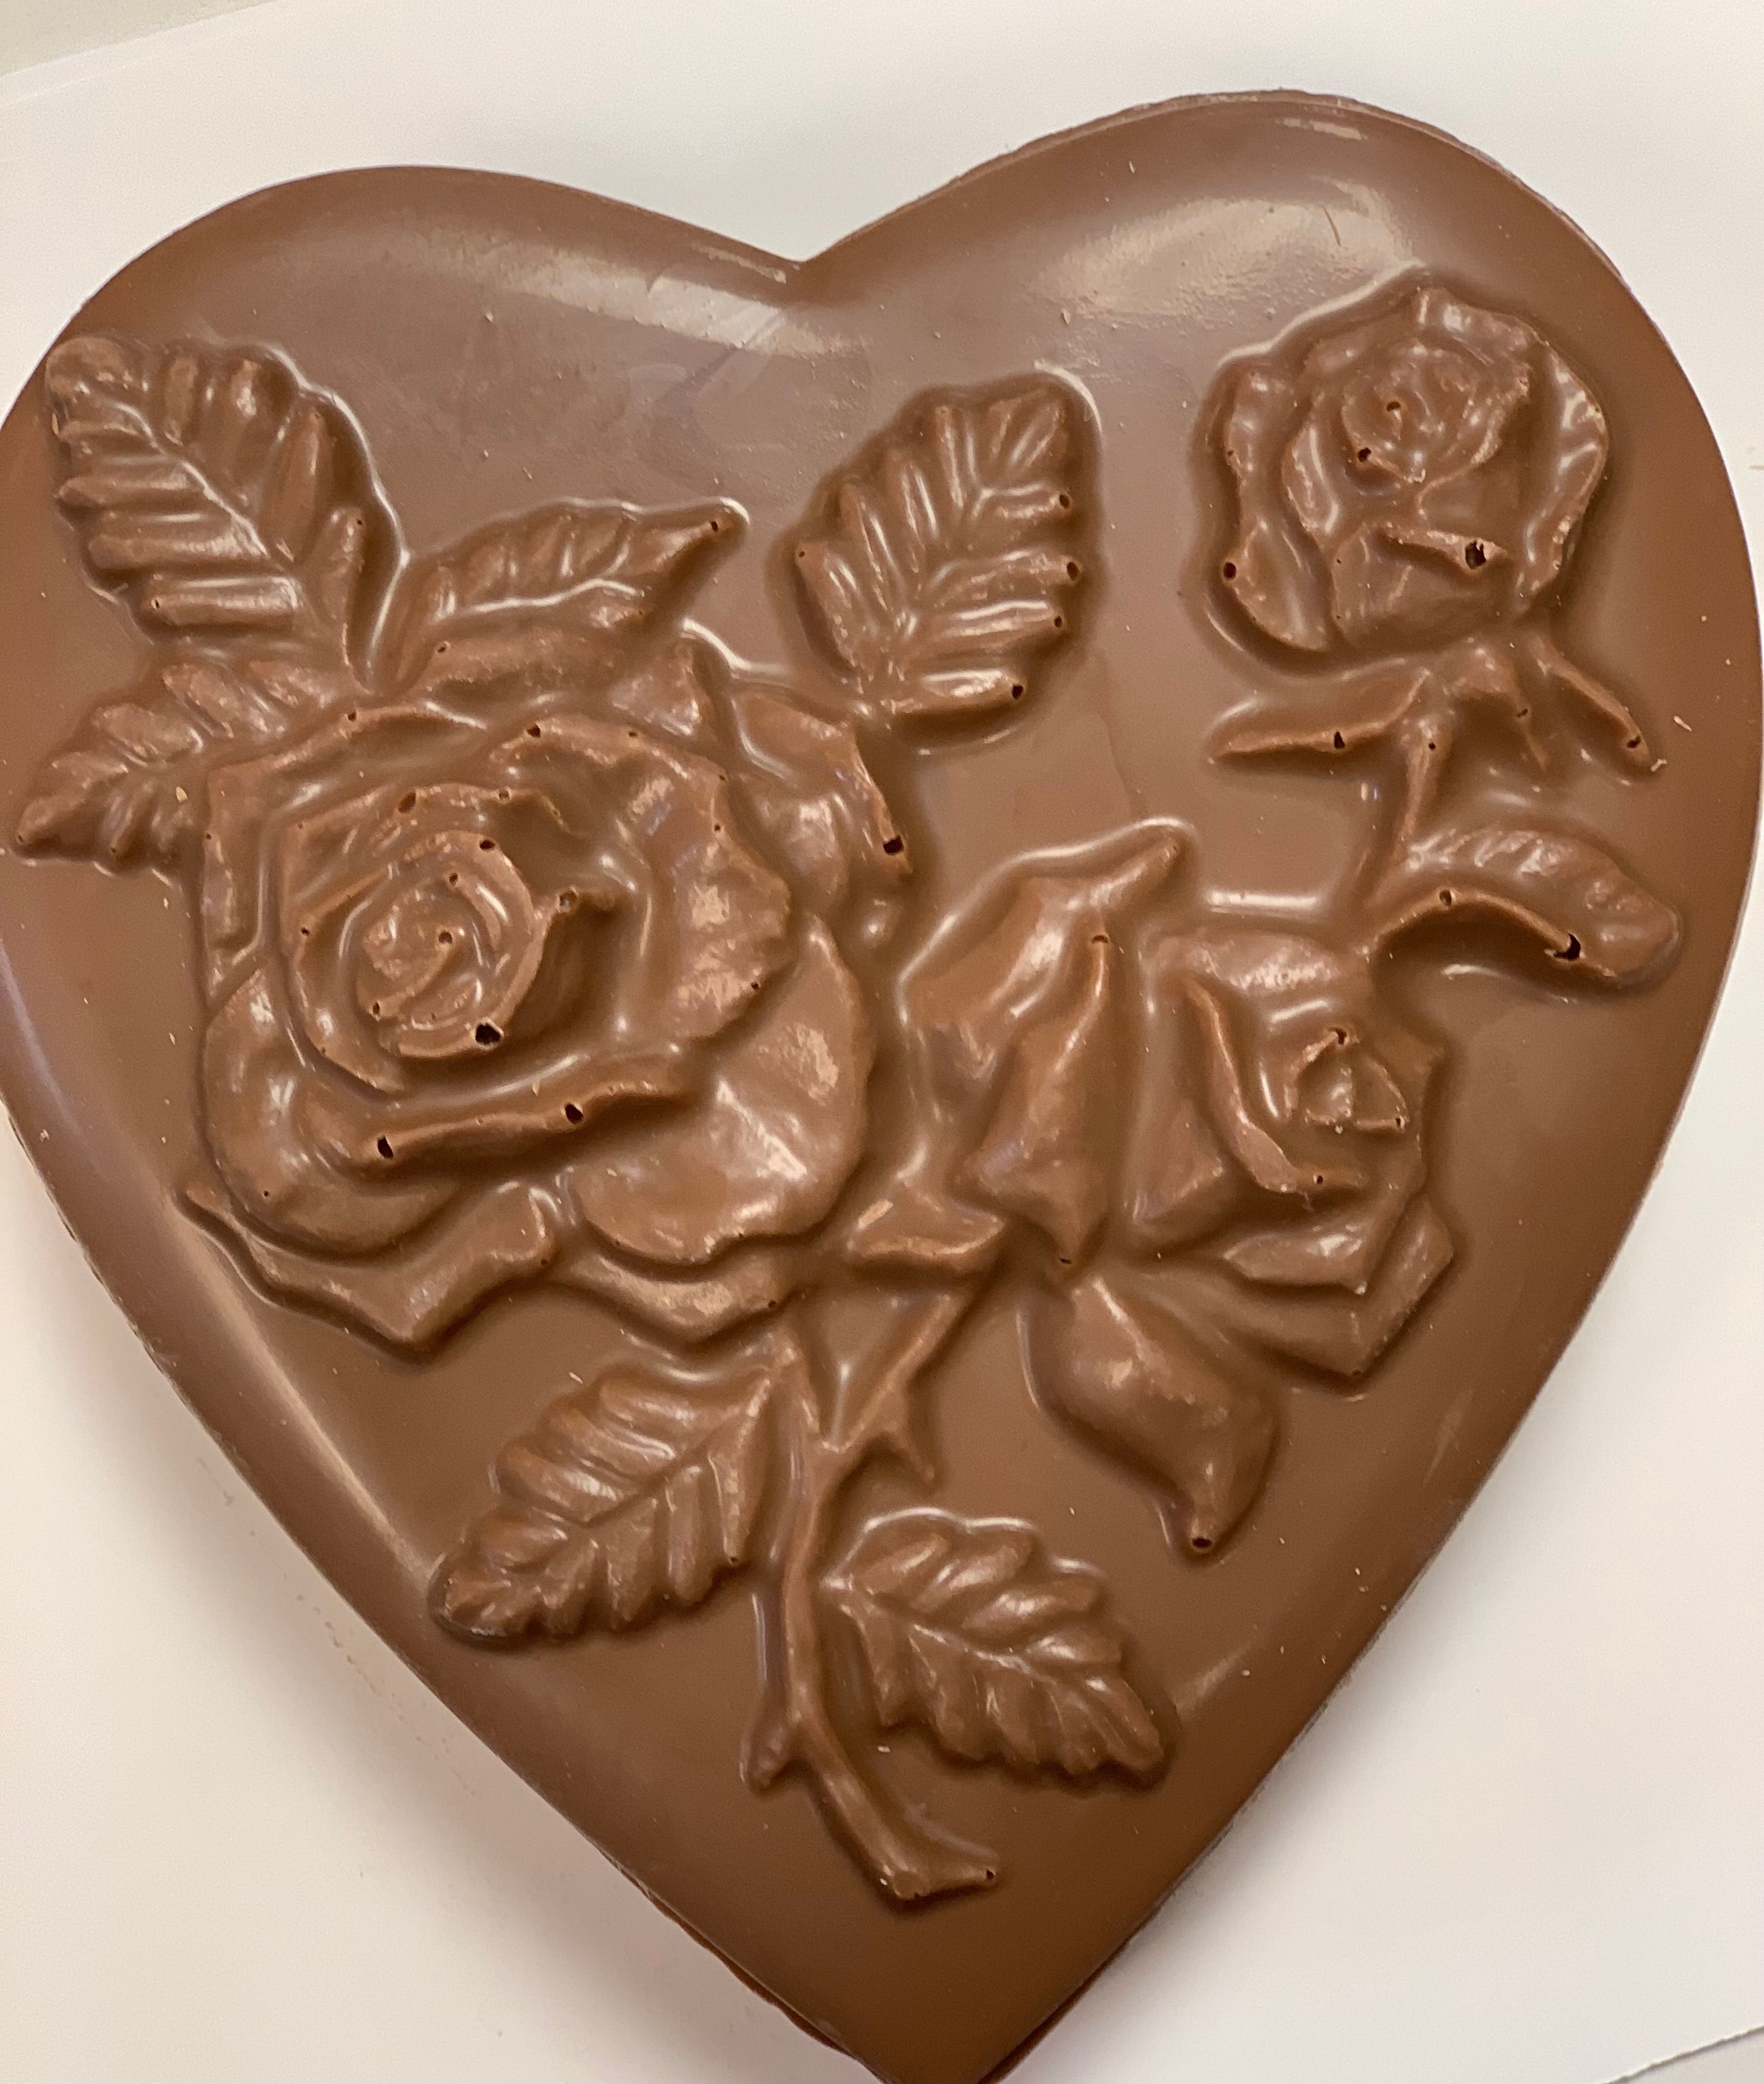 Chocolate Heart Box (small) - Dayton Homemade Chocolates & Gift Baskets